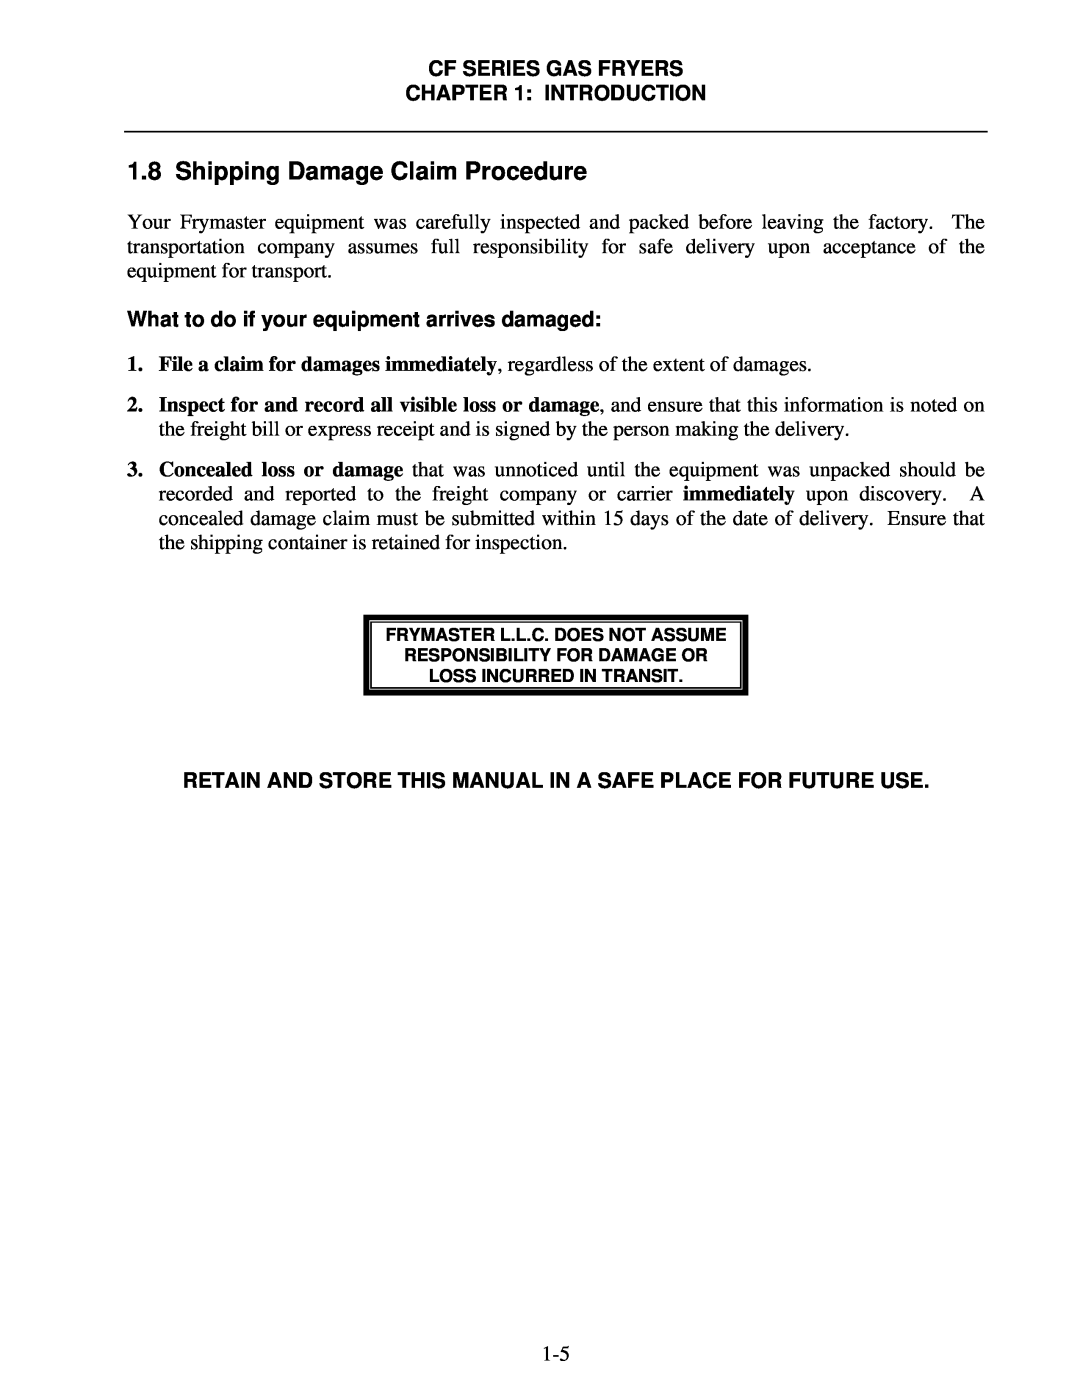 Frymaster FMCF operation manual Shipping Damage Claim Procedure 